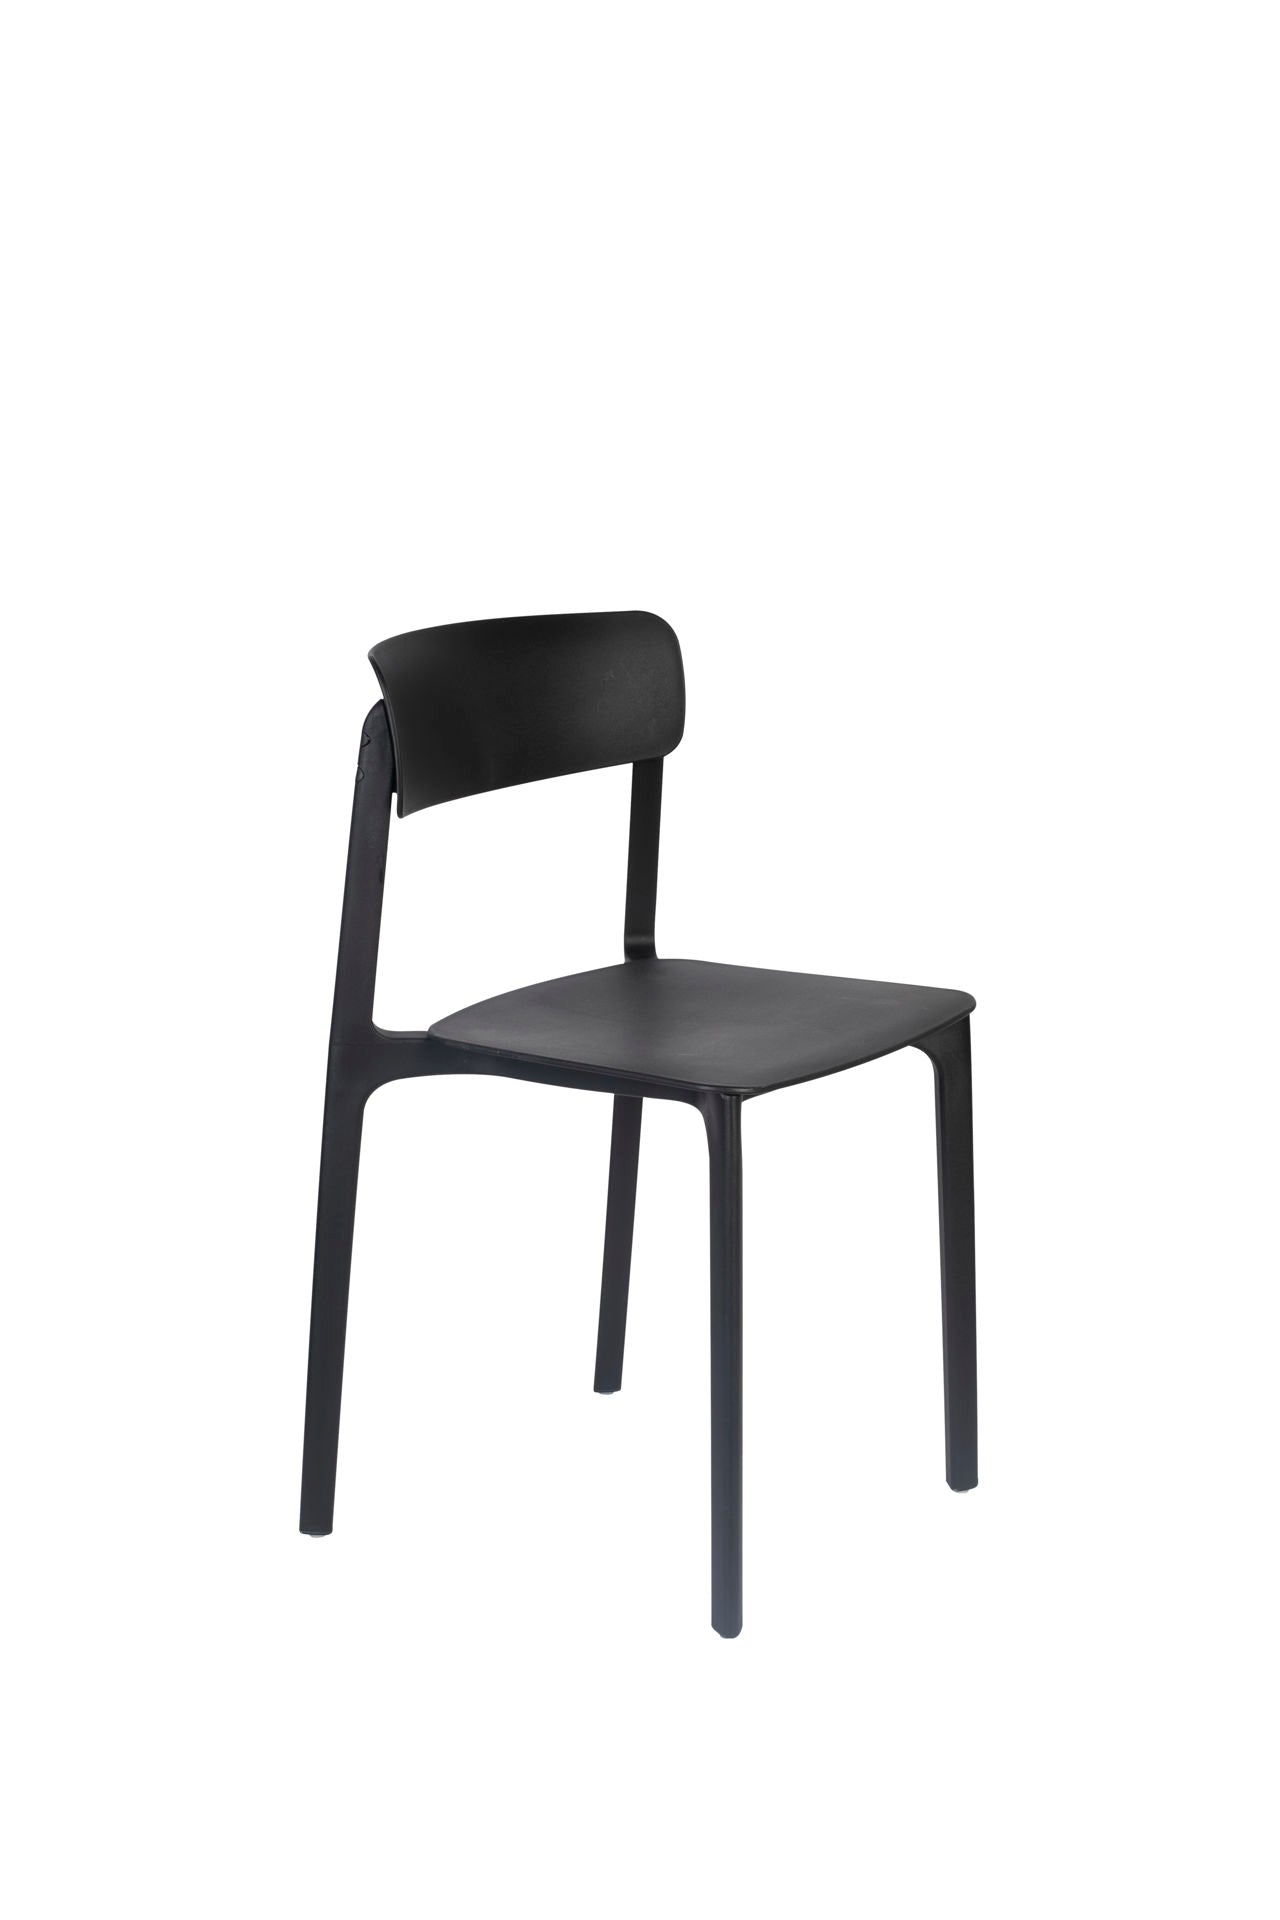 Nancy's Signal Mountain Chair - Retro - Zwart - Polypropyleen, Kunststof - 47 cm x 48 cm x 94 cm